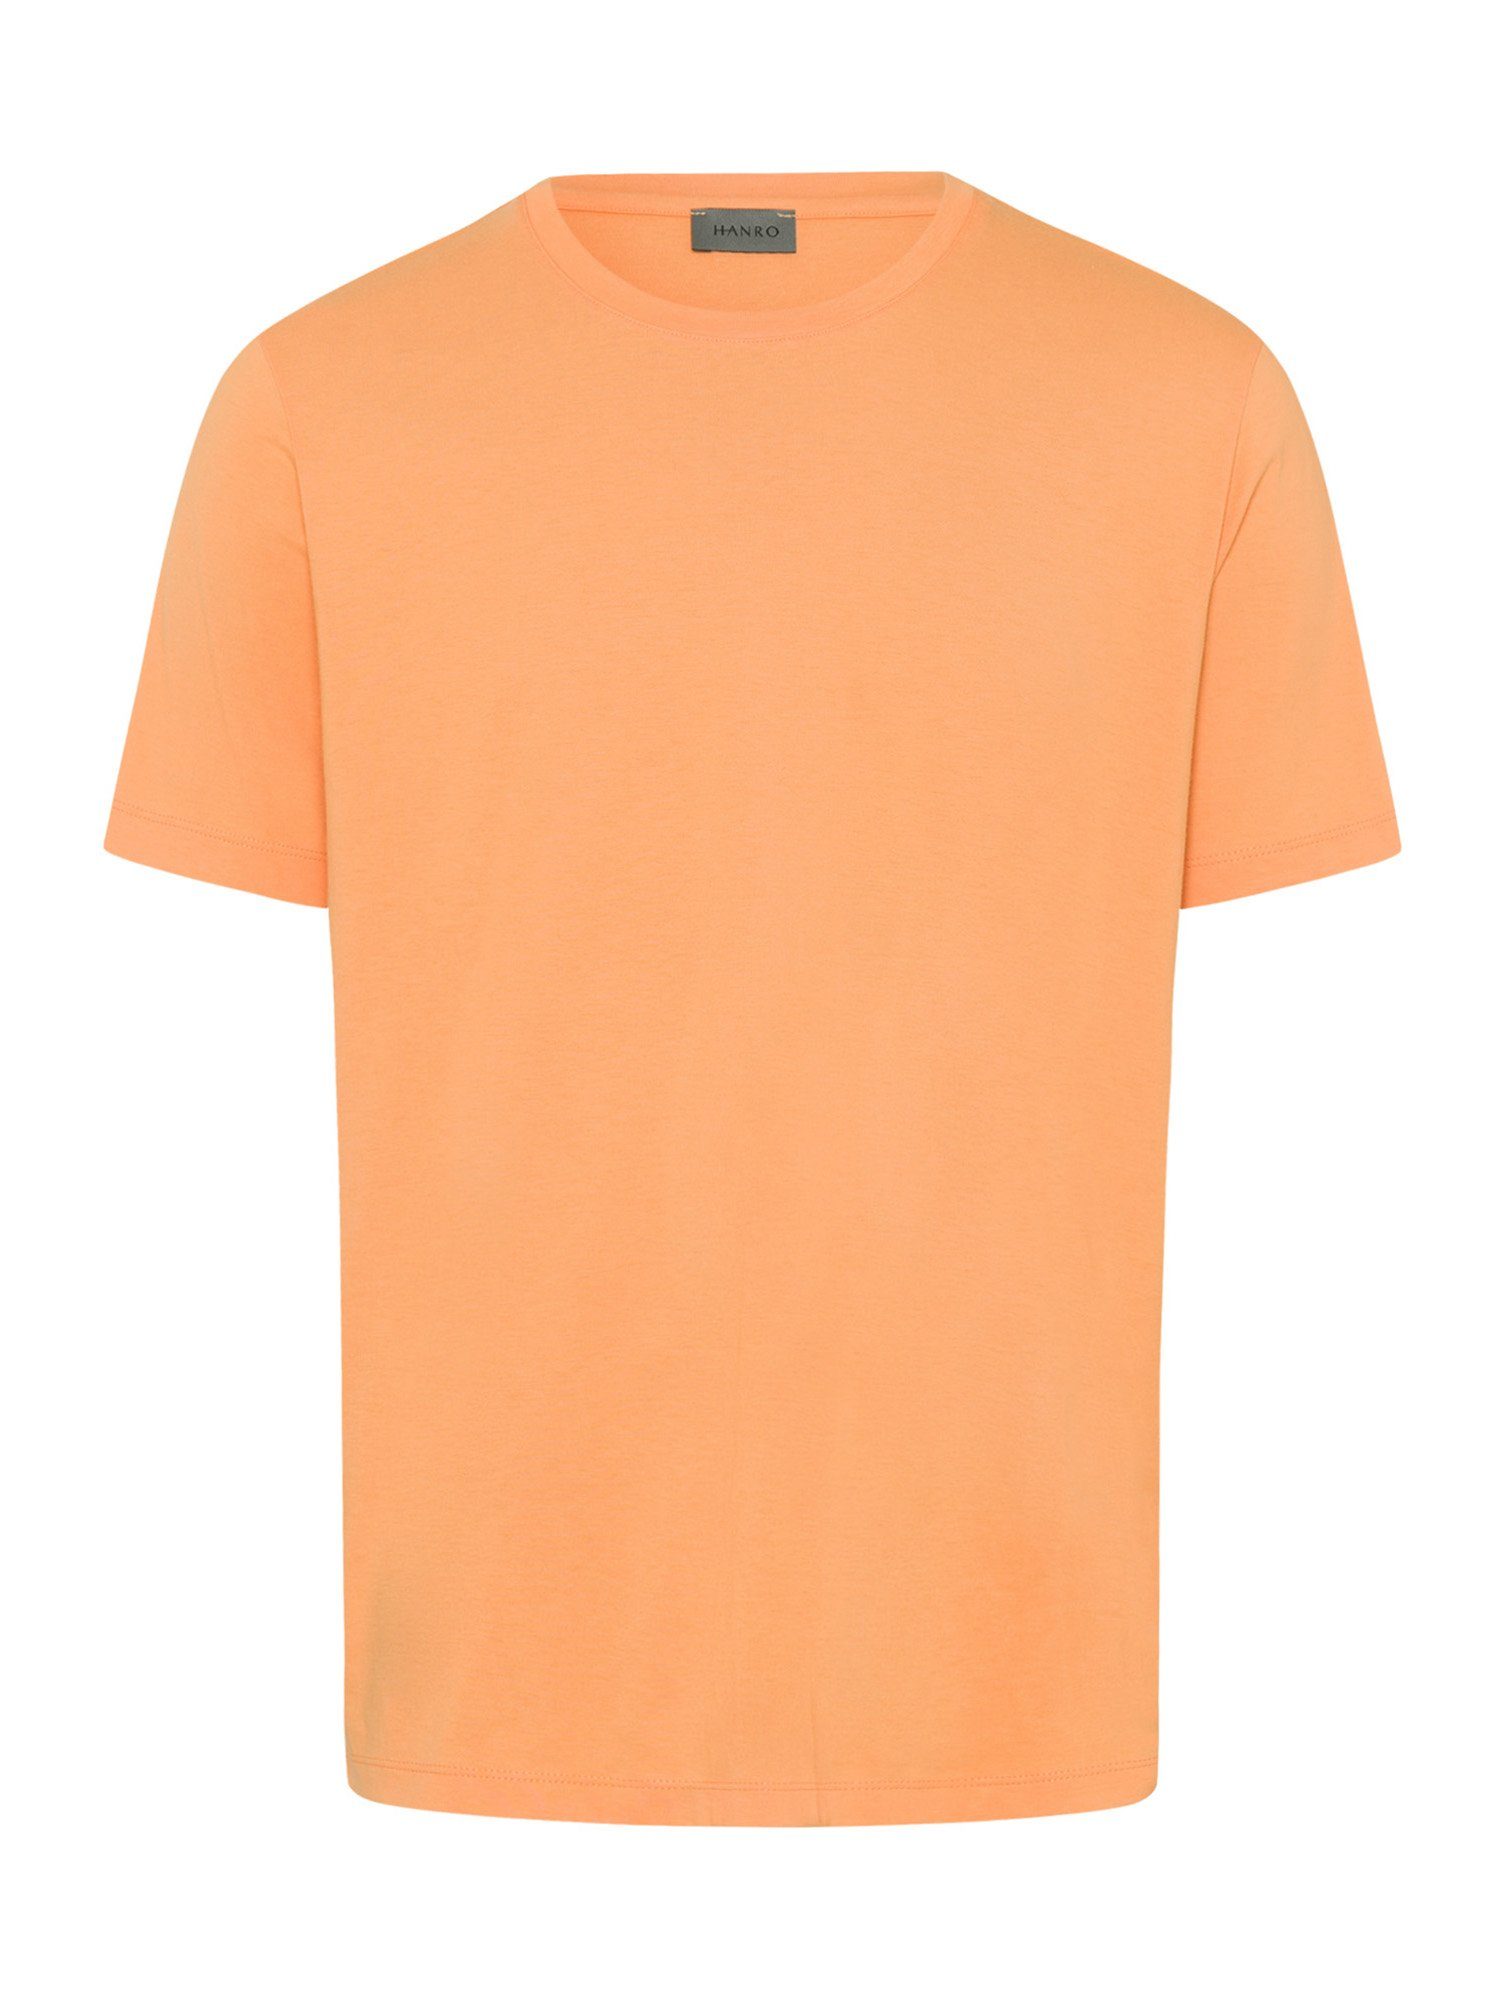 Hanro T-Shirt Living Shirts tangerine